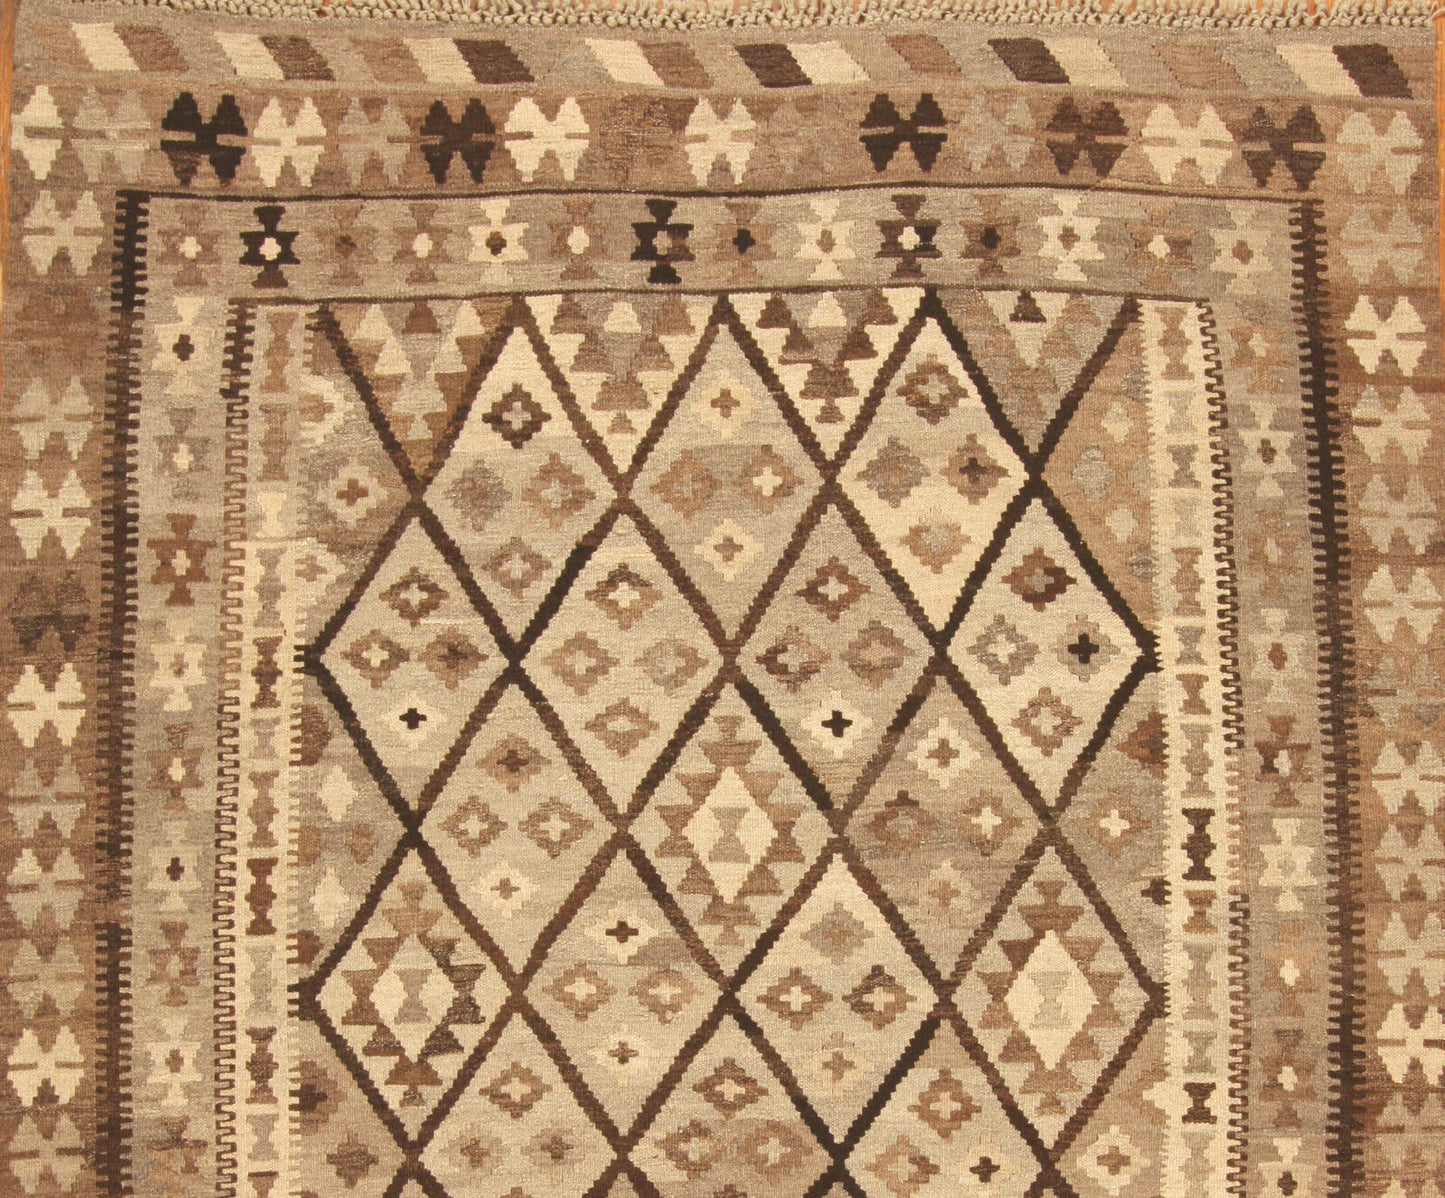 Close-up of the timeless geometric design on the Handmade Vintage Afghan Flatweave Kilim